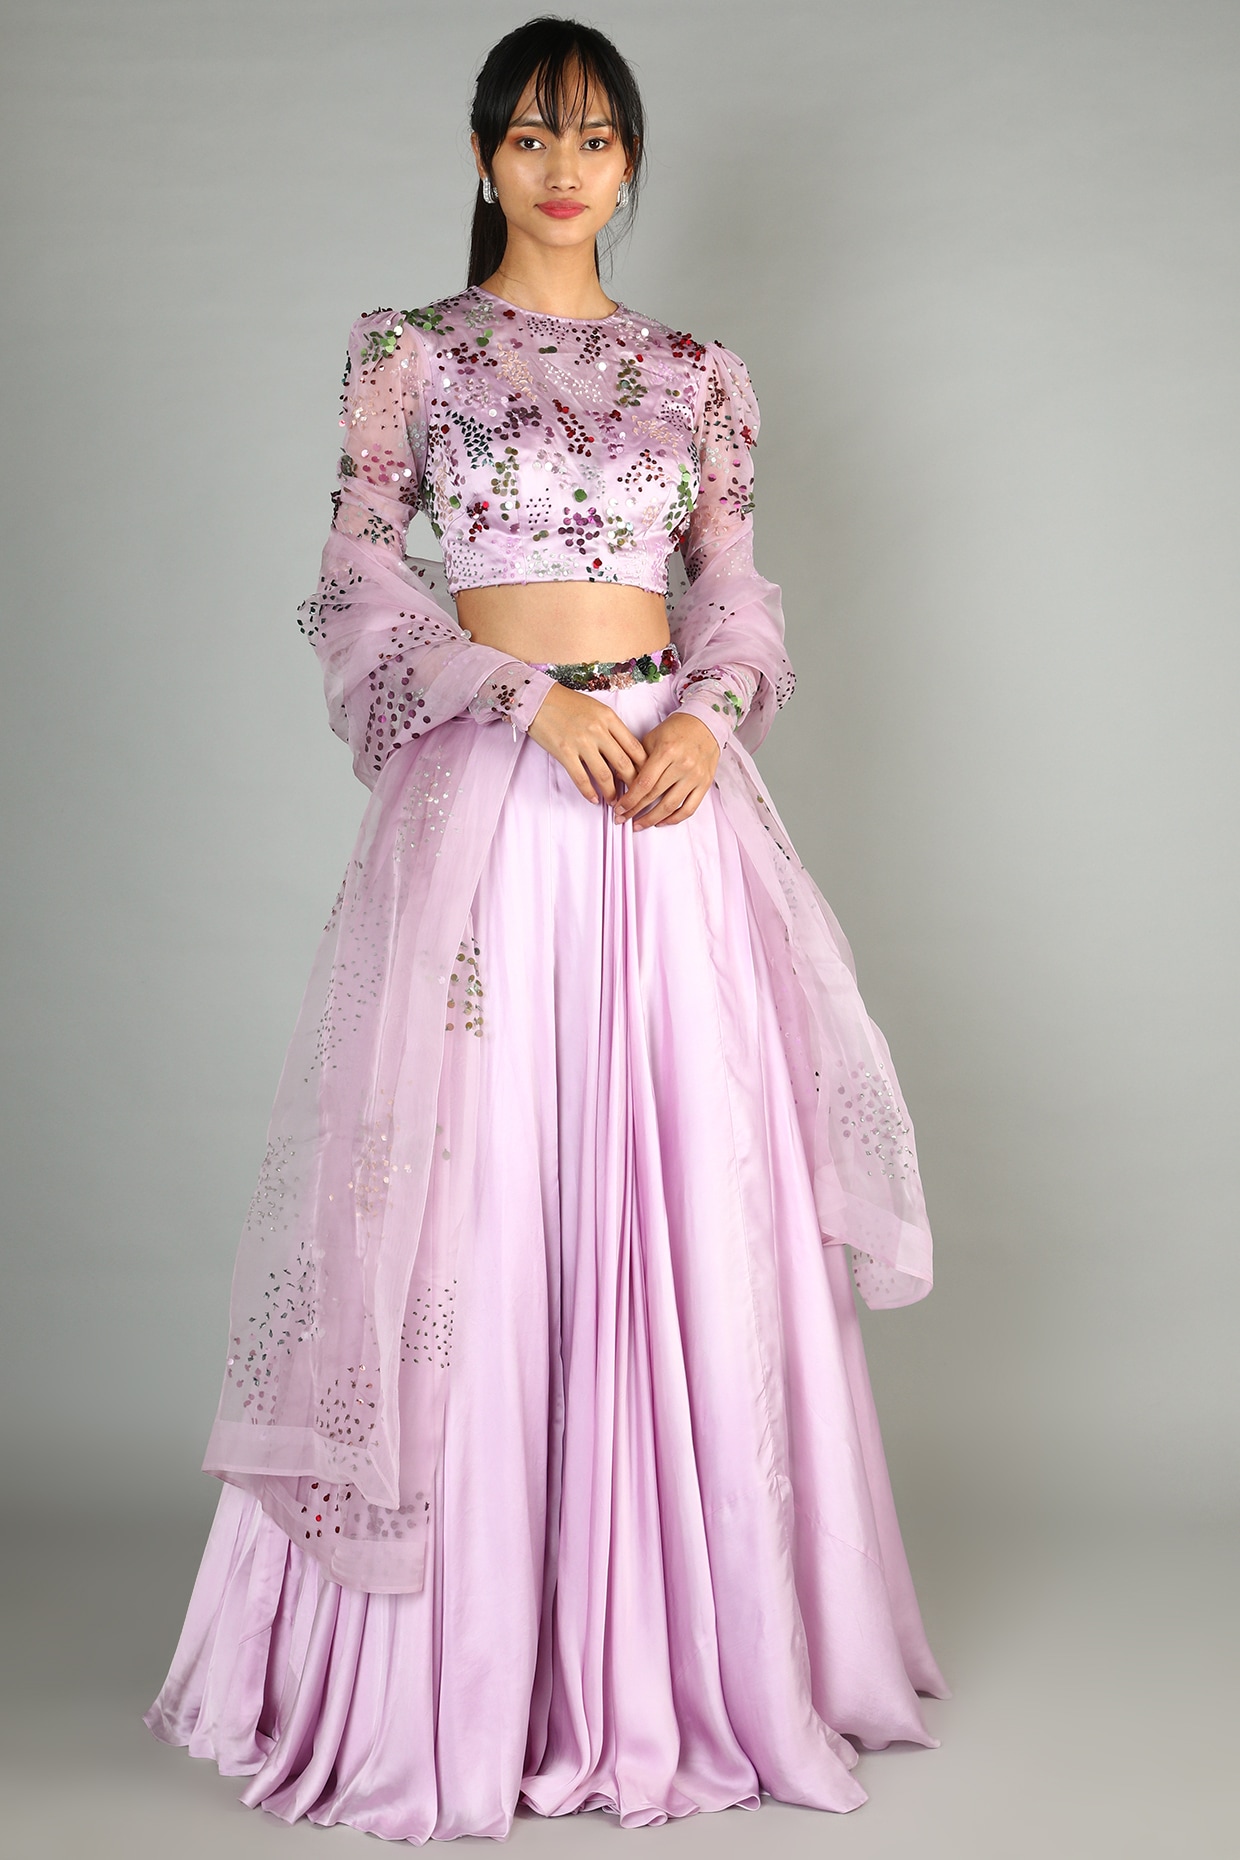 Buy 68/10XL Size Long Satin Islamic Wedding Clothing Online for Women in USA